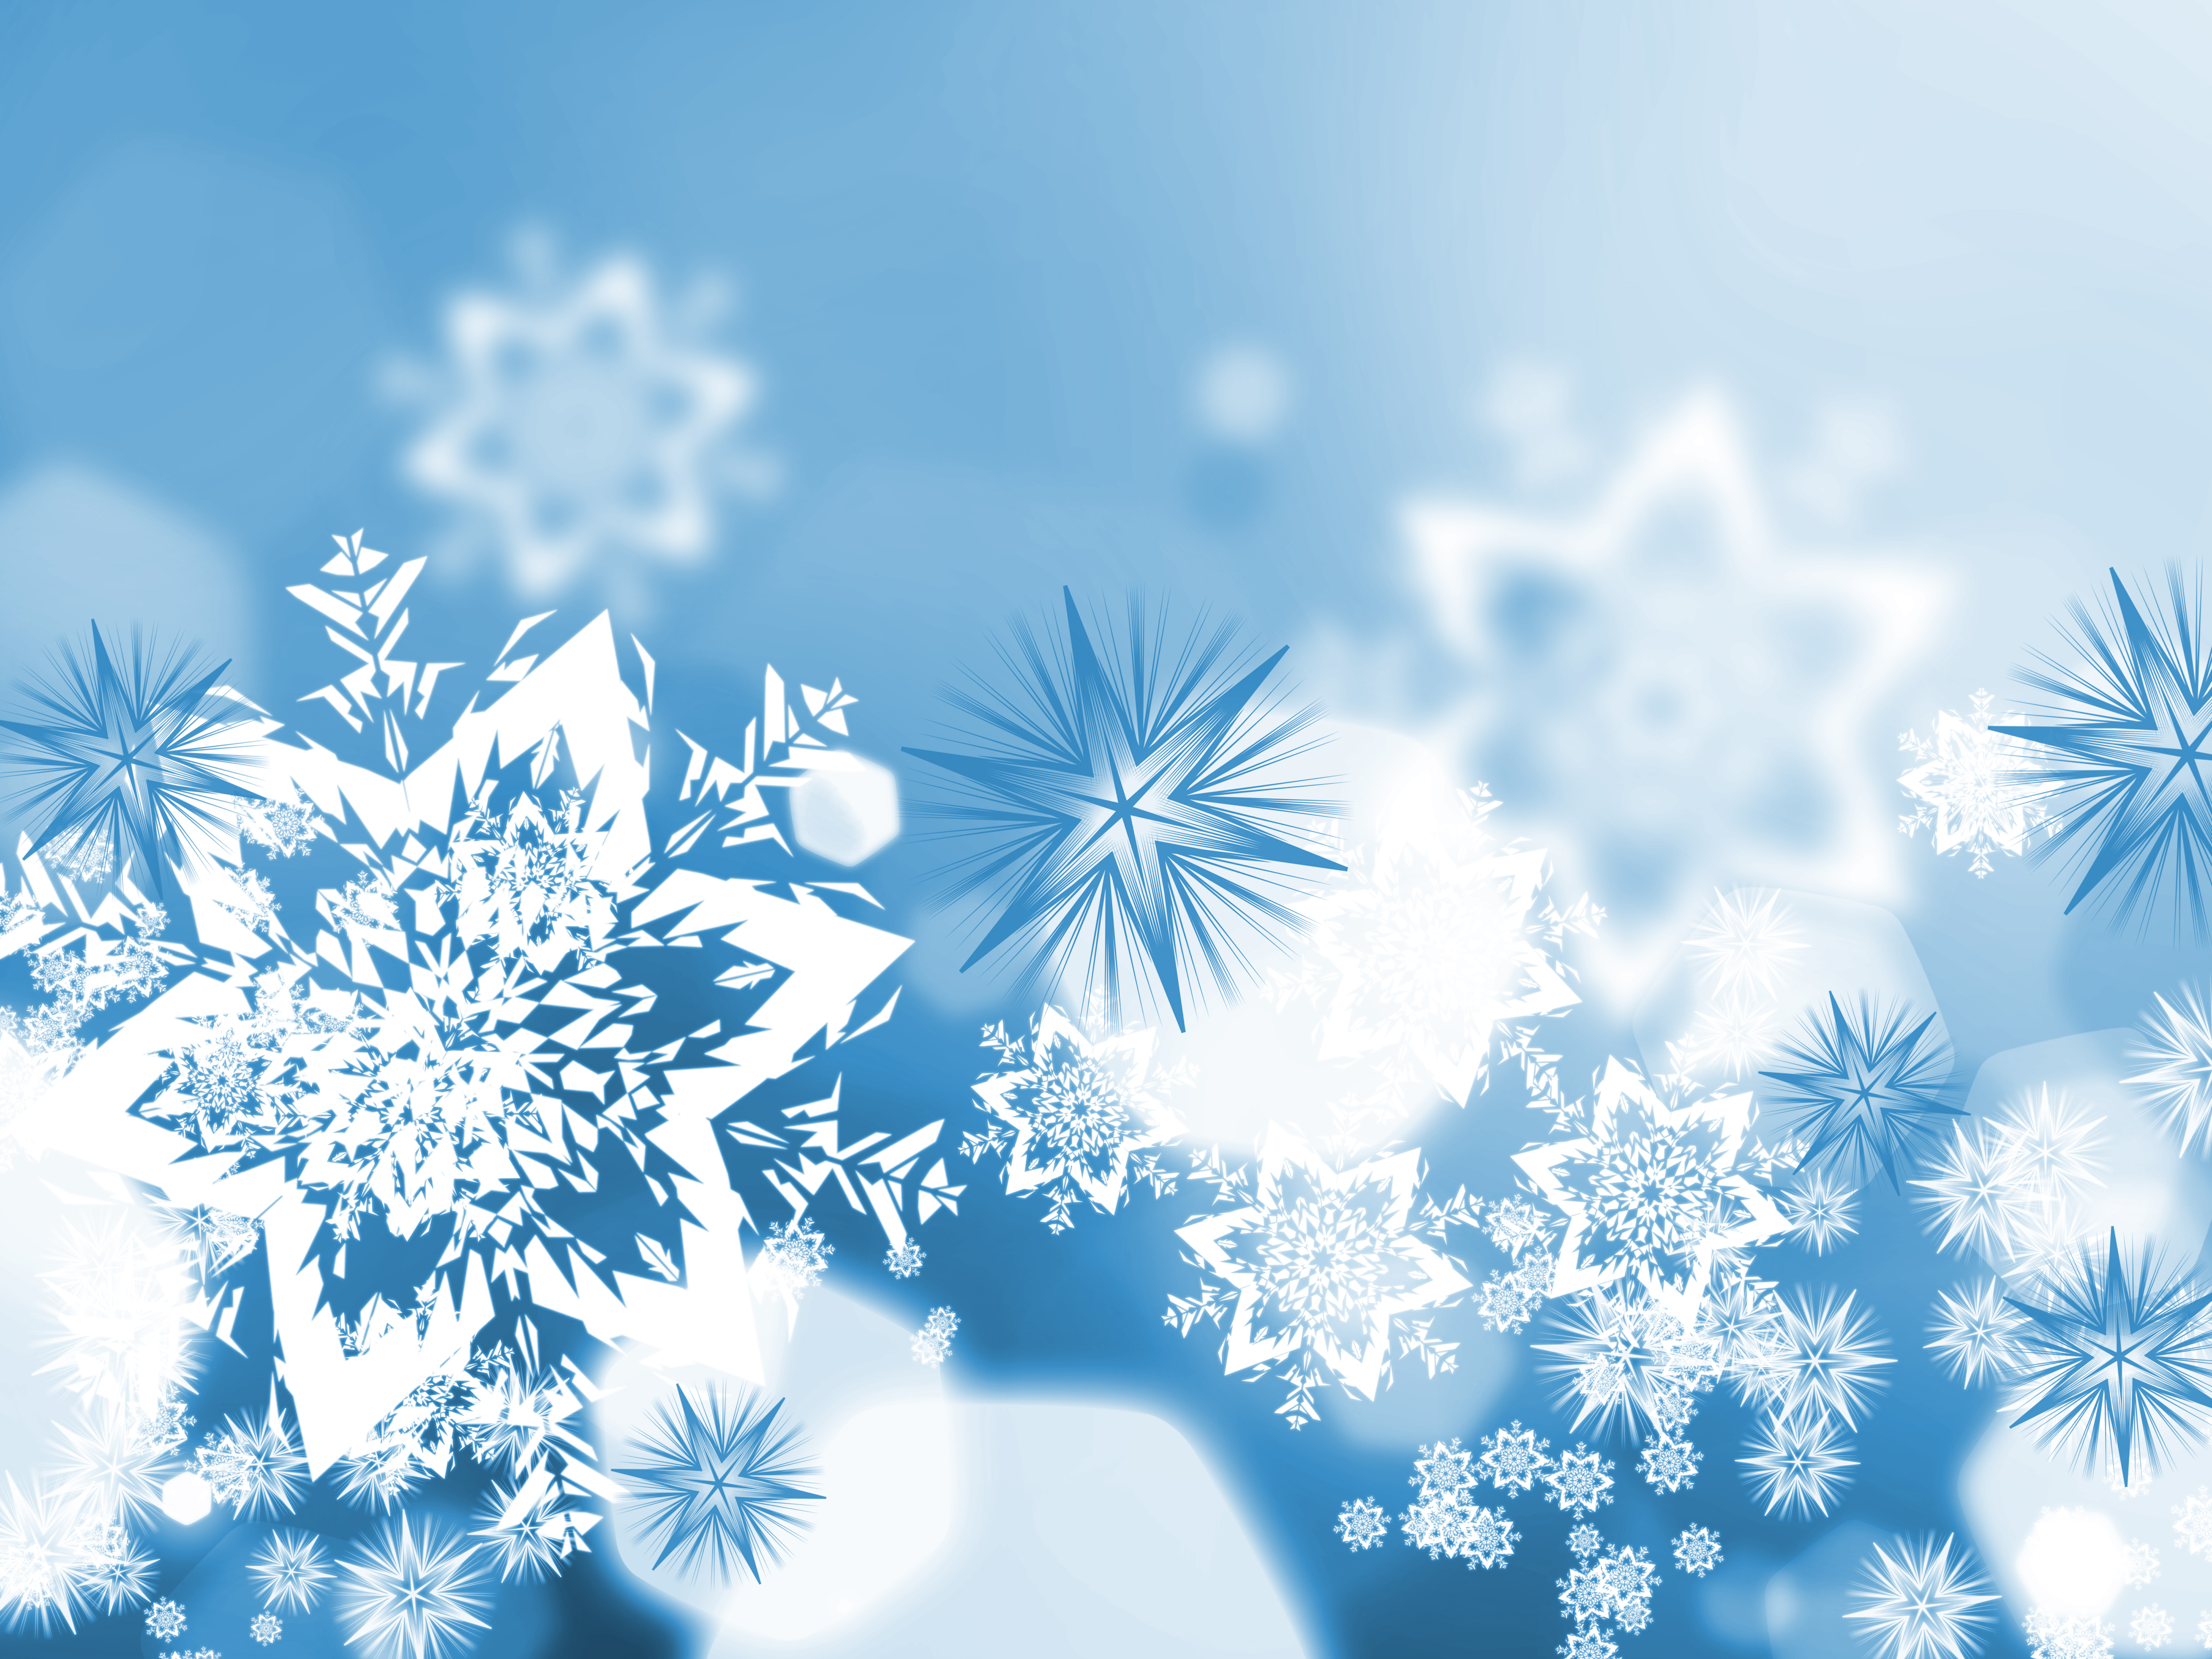 Xmas Snowflakes Background Psdgraphics